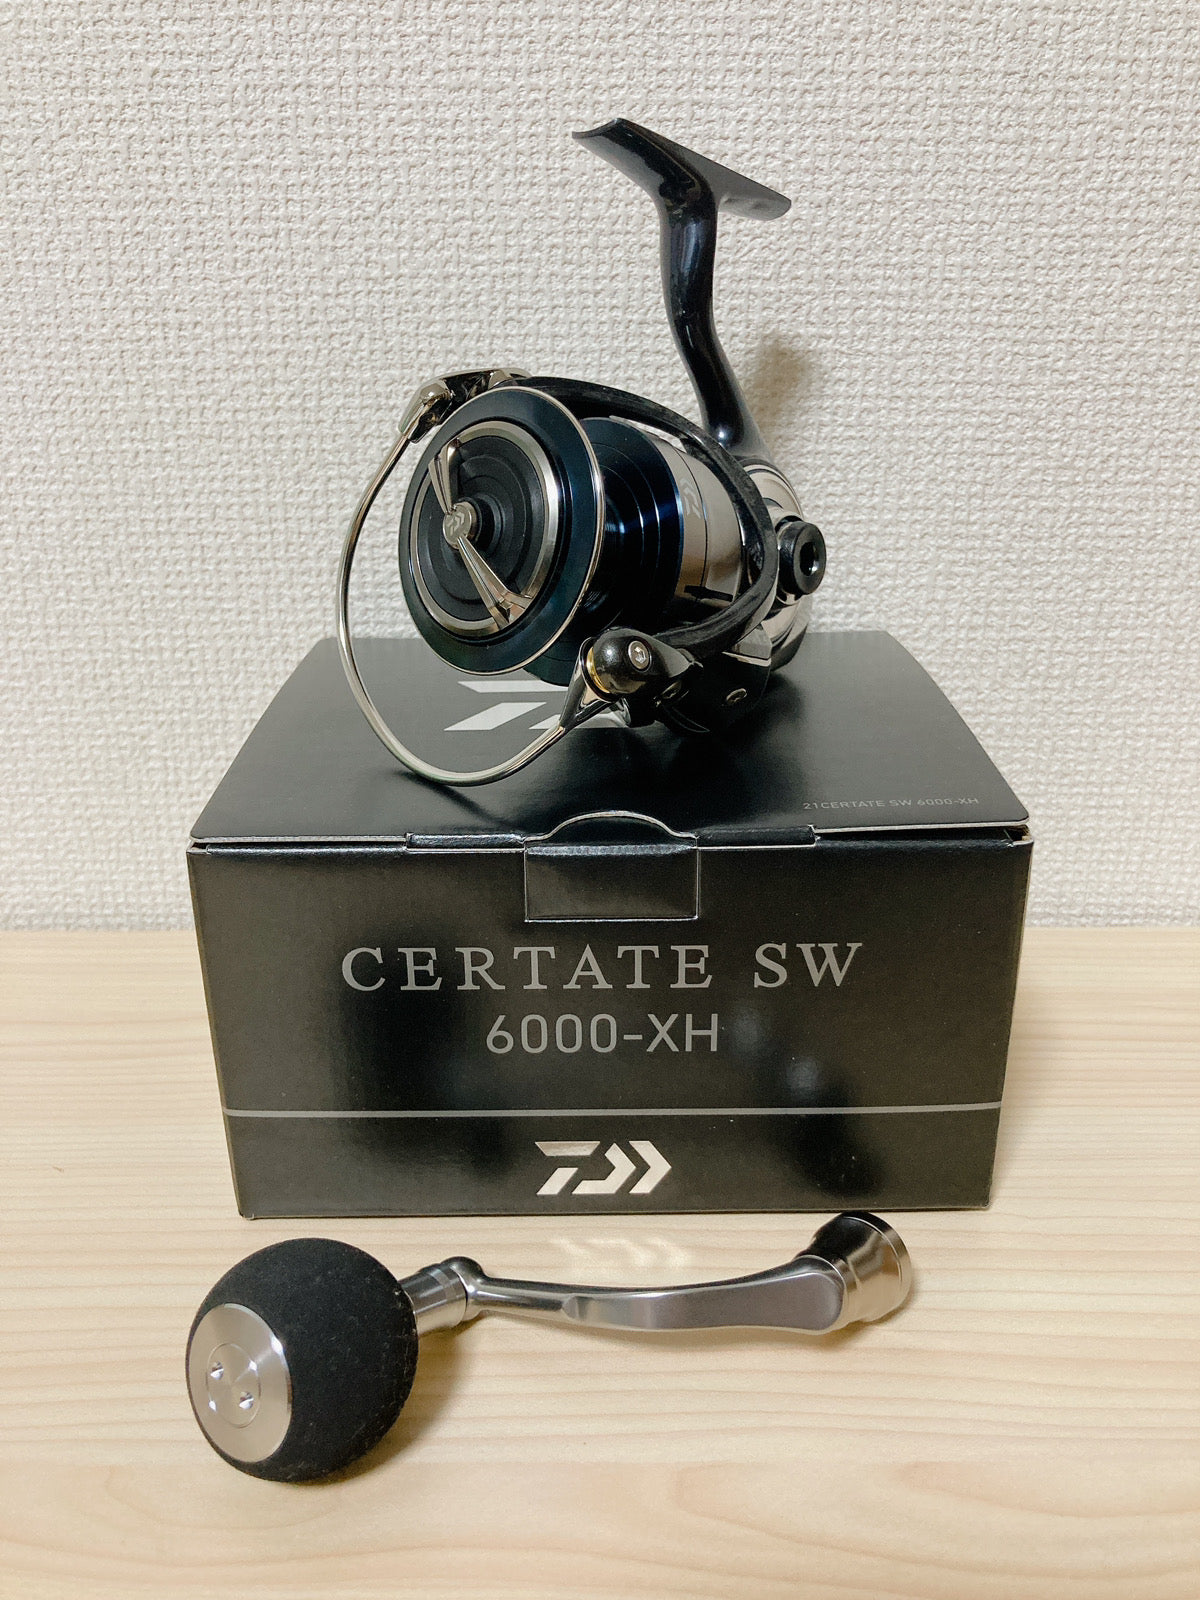 Daiwa Spinning Reel 21 Celtate SW 6000-XH Gear Ratio 6.2 Fishing Reel IN BOX